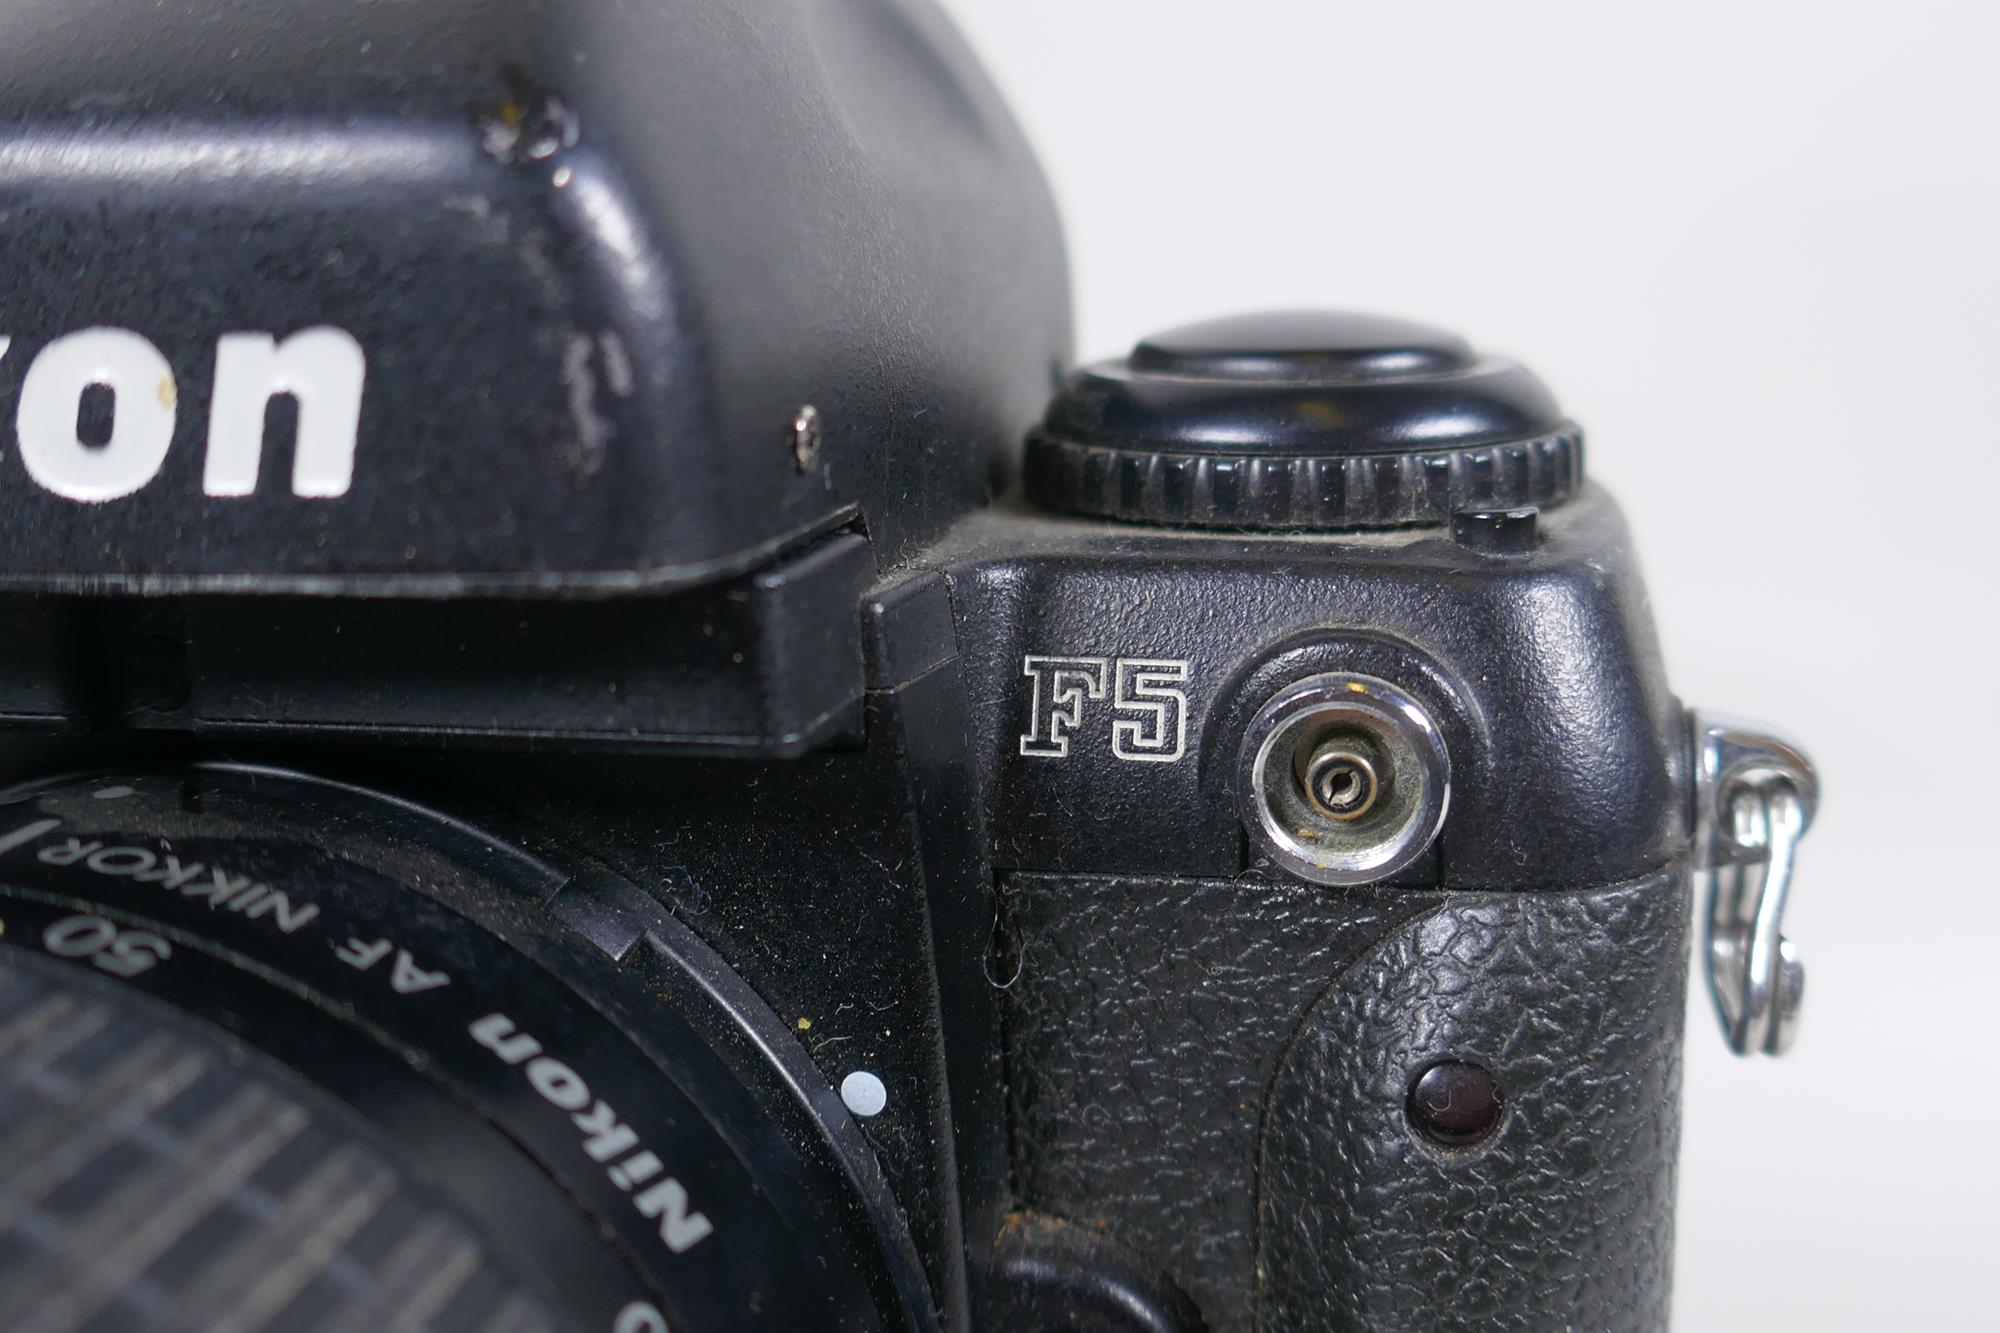 A Nikon F5 Kodak Professional DCS 620 digital camera, fitted with an AF Nikkor 28-80mm lens, - Image 3 of 8